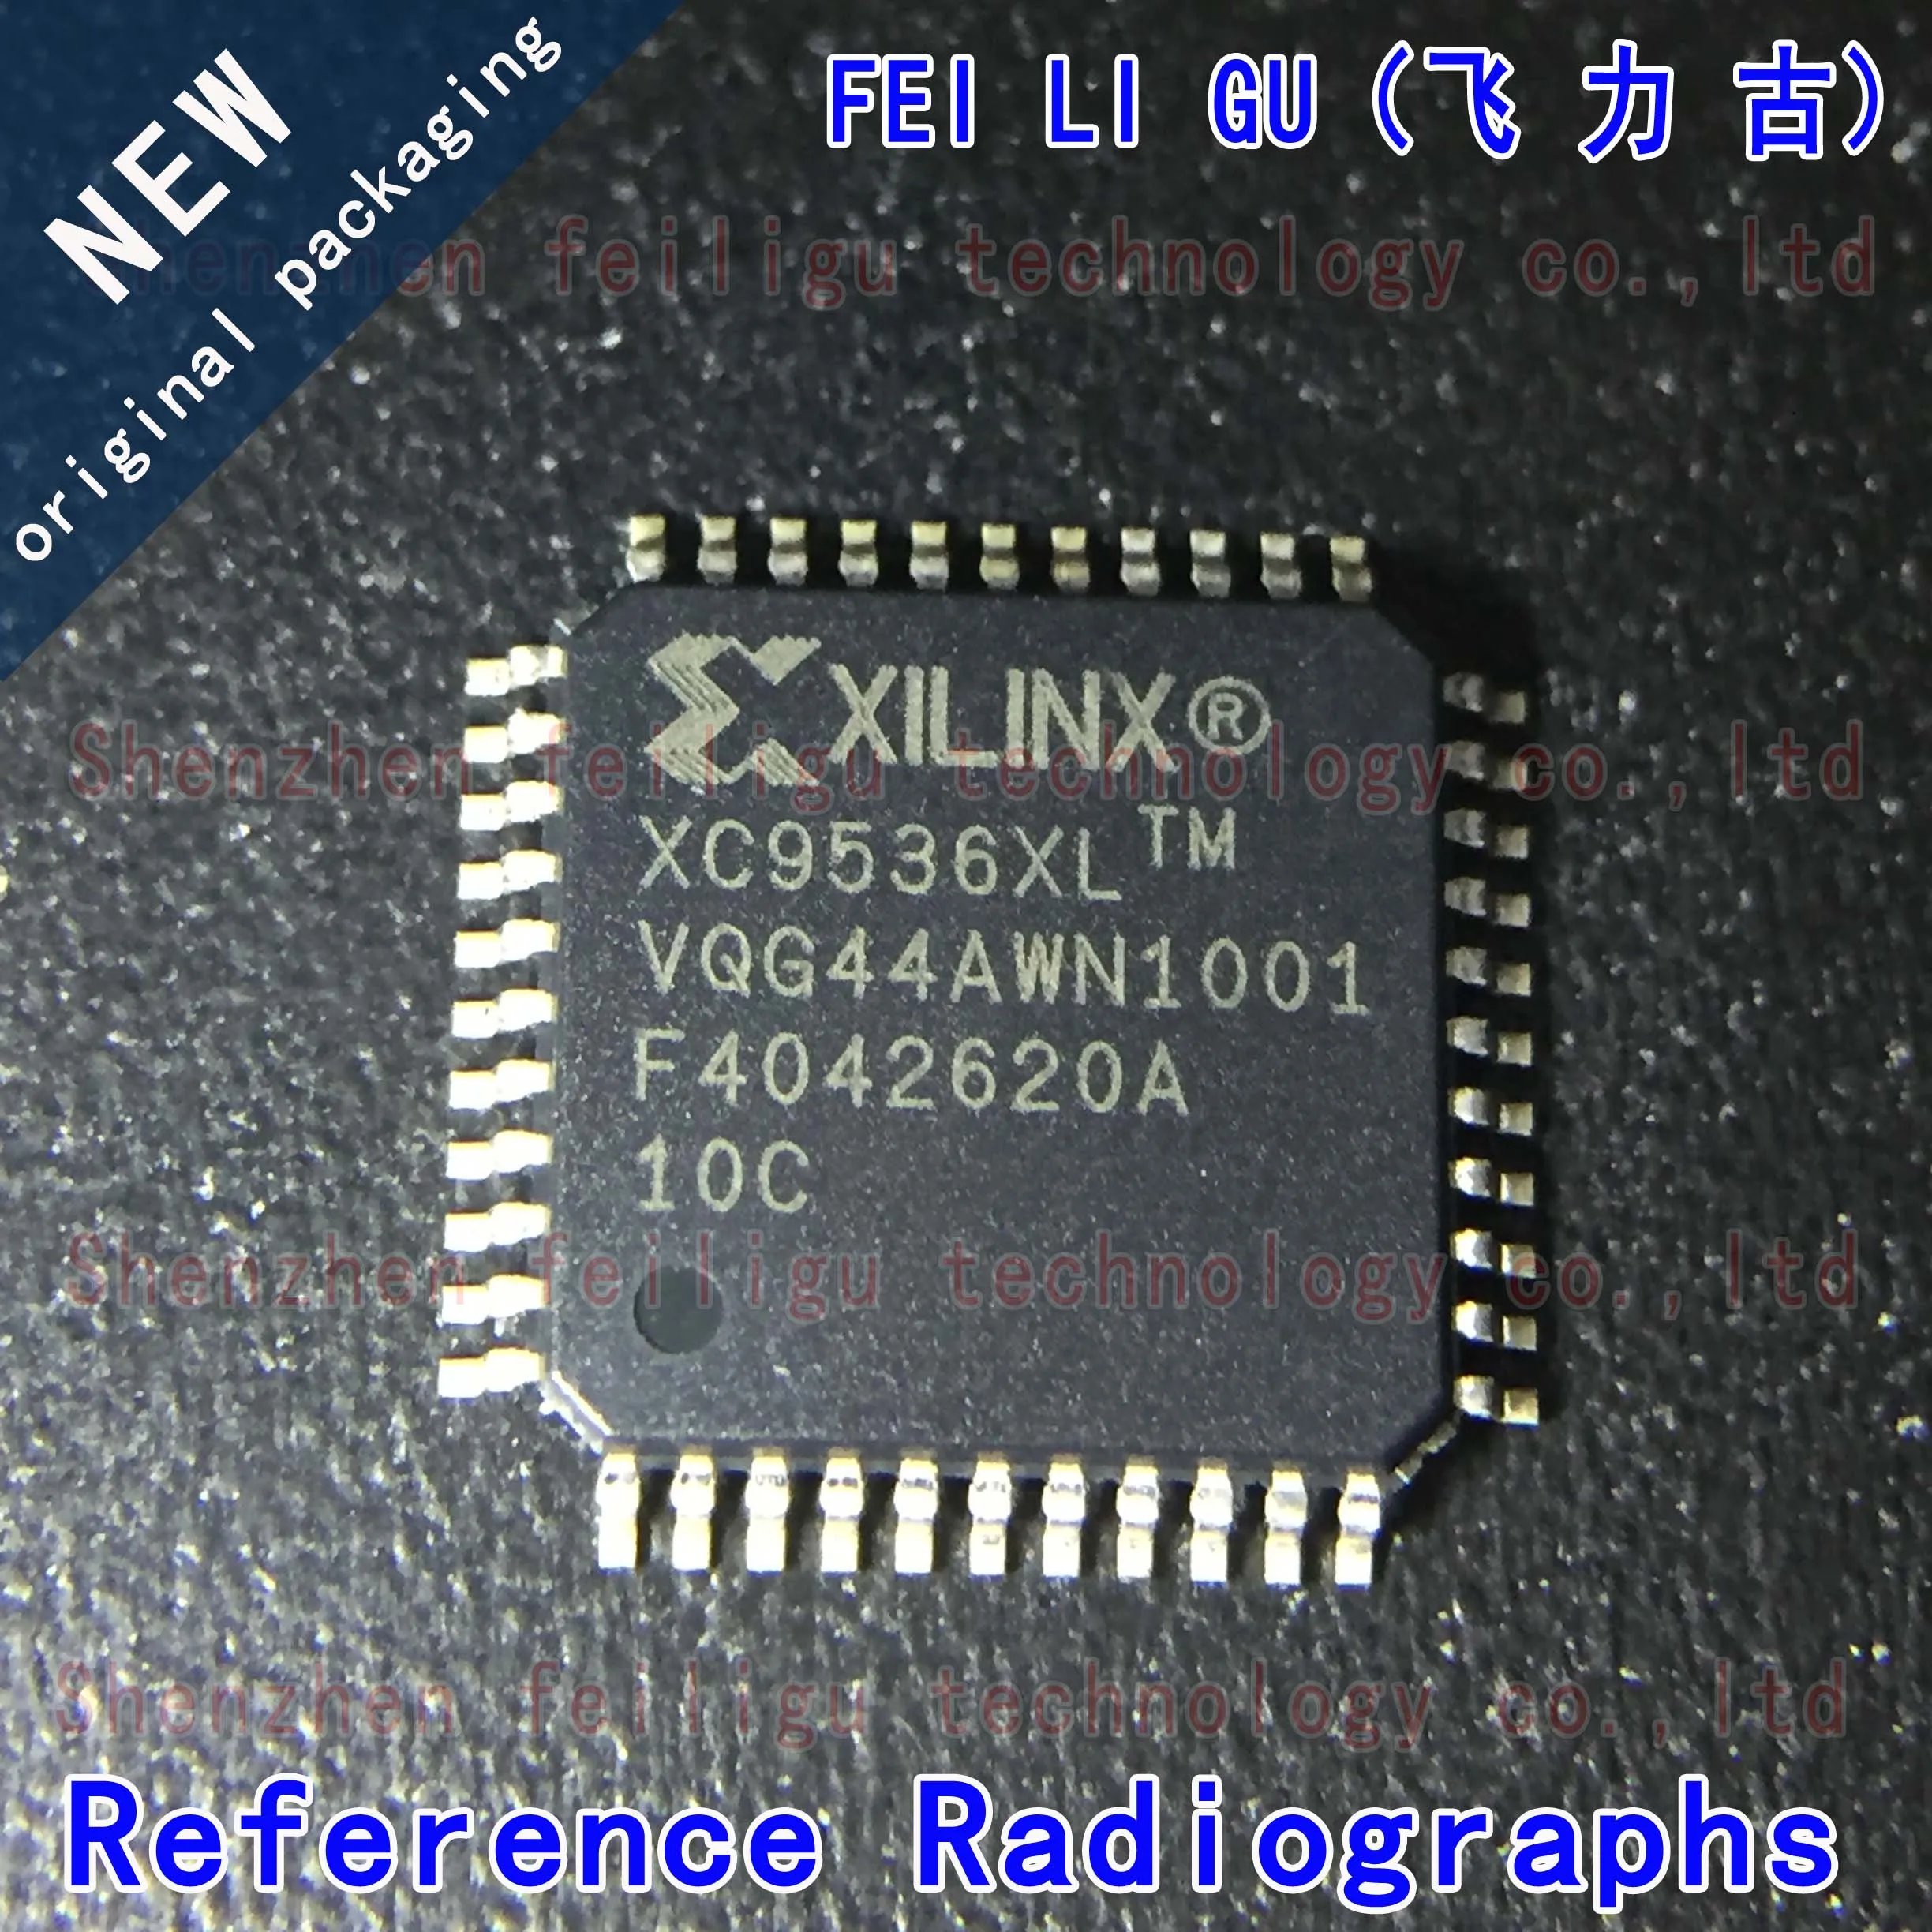 1PCS 100% New original XC9536XL-10VQG44C XC9536XL-10VQ44C XC9536XL Package:TQFP44 Programmable Logic Device CPLD/FPGA Chip 1 30pcs 100% new original at89s52 24au at89s52 24 at89s52 package tqfp44 mcu mpu soc 8 bit microcontroller chip